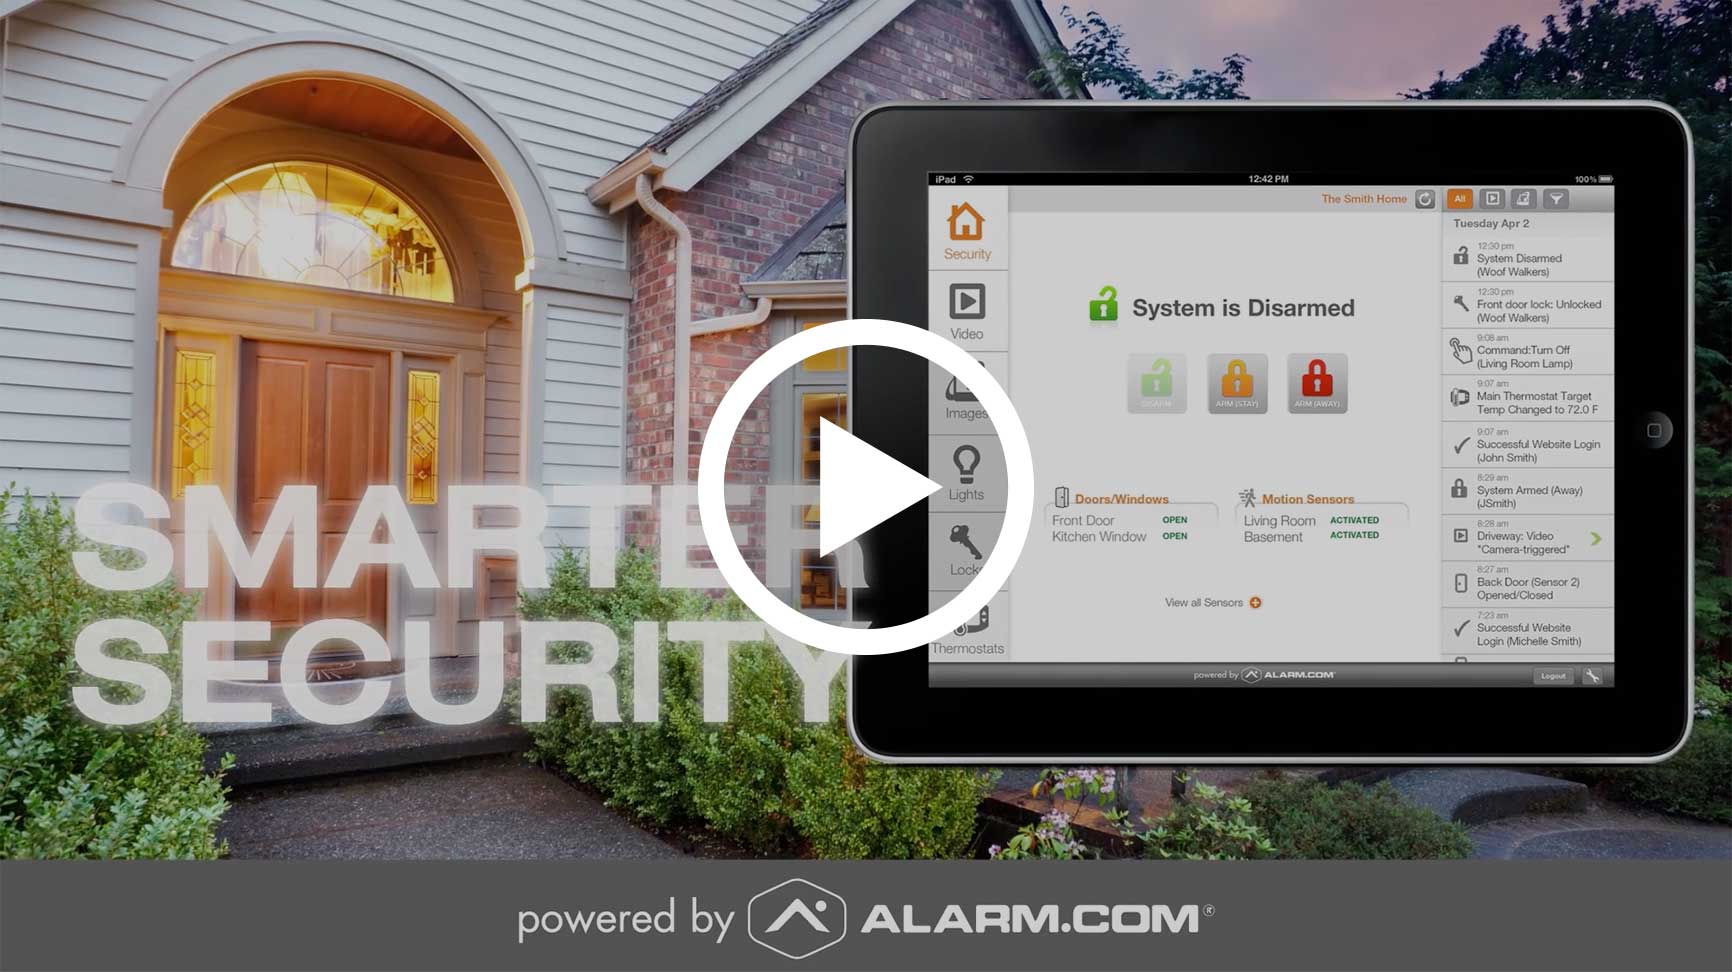 Image of Alarm.com services video.